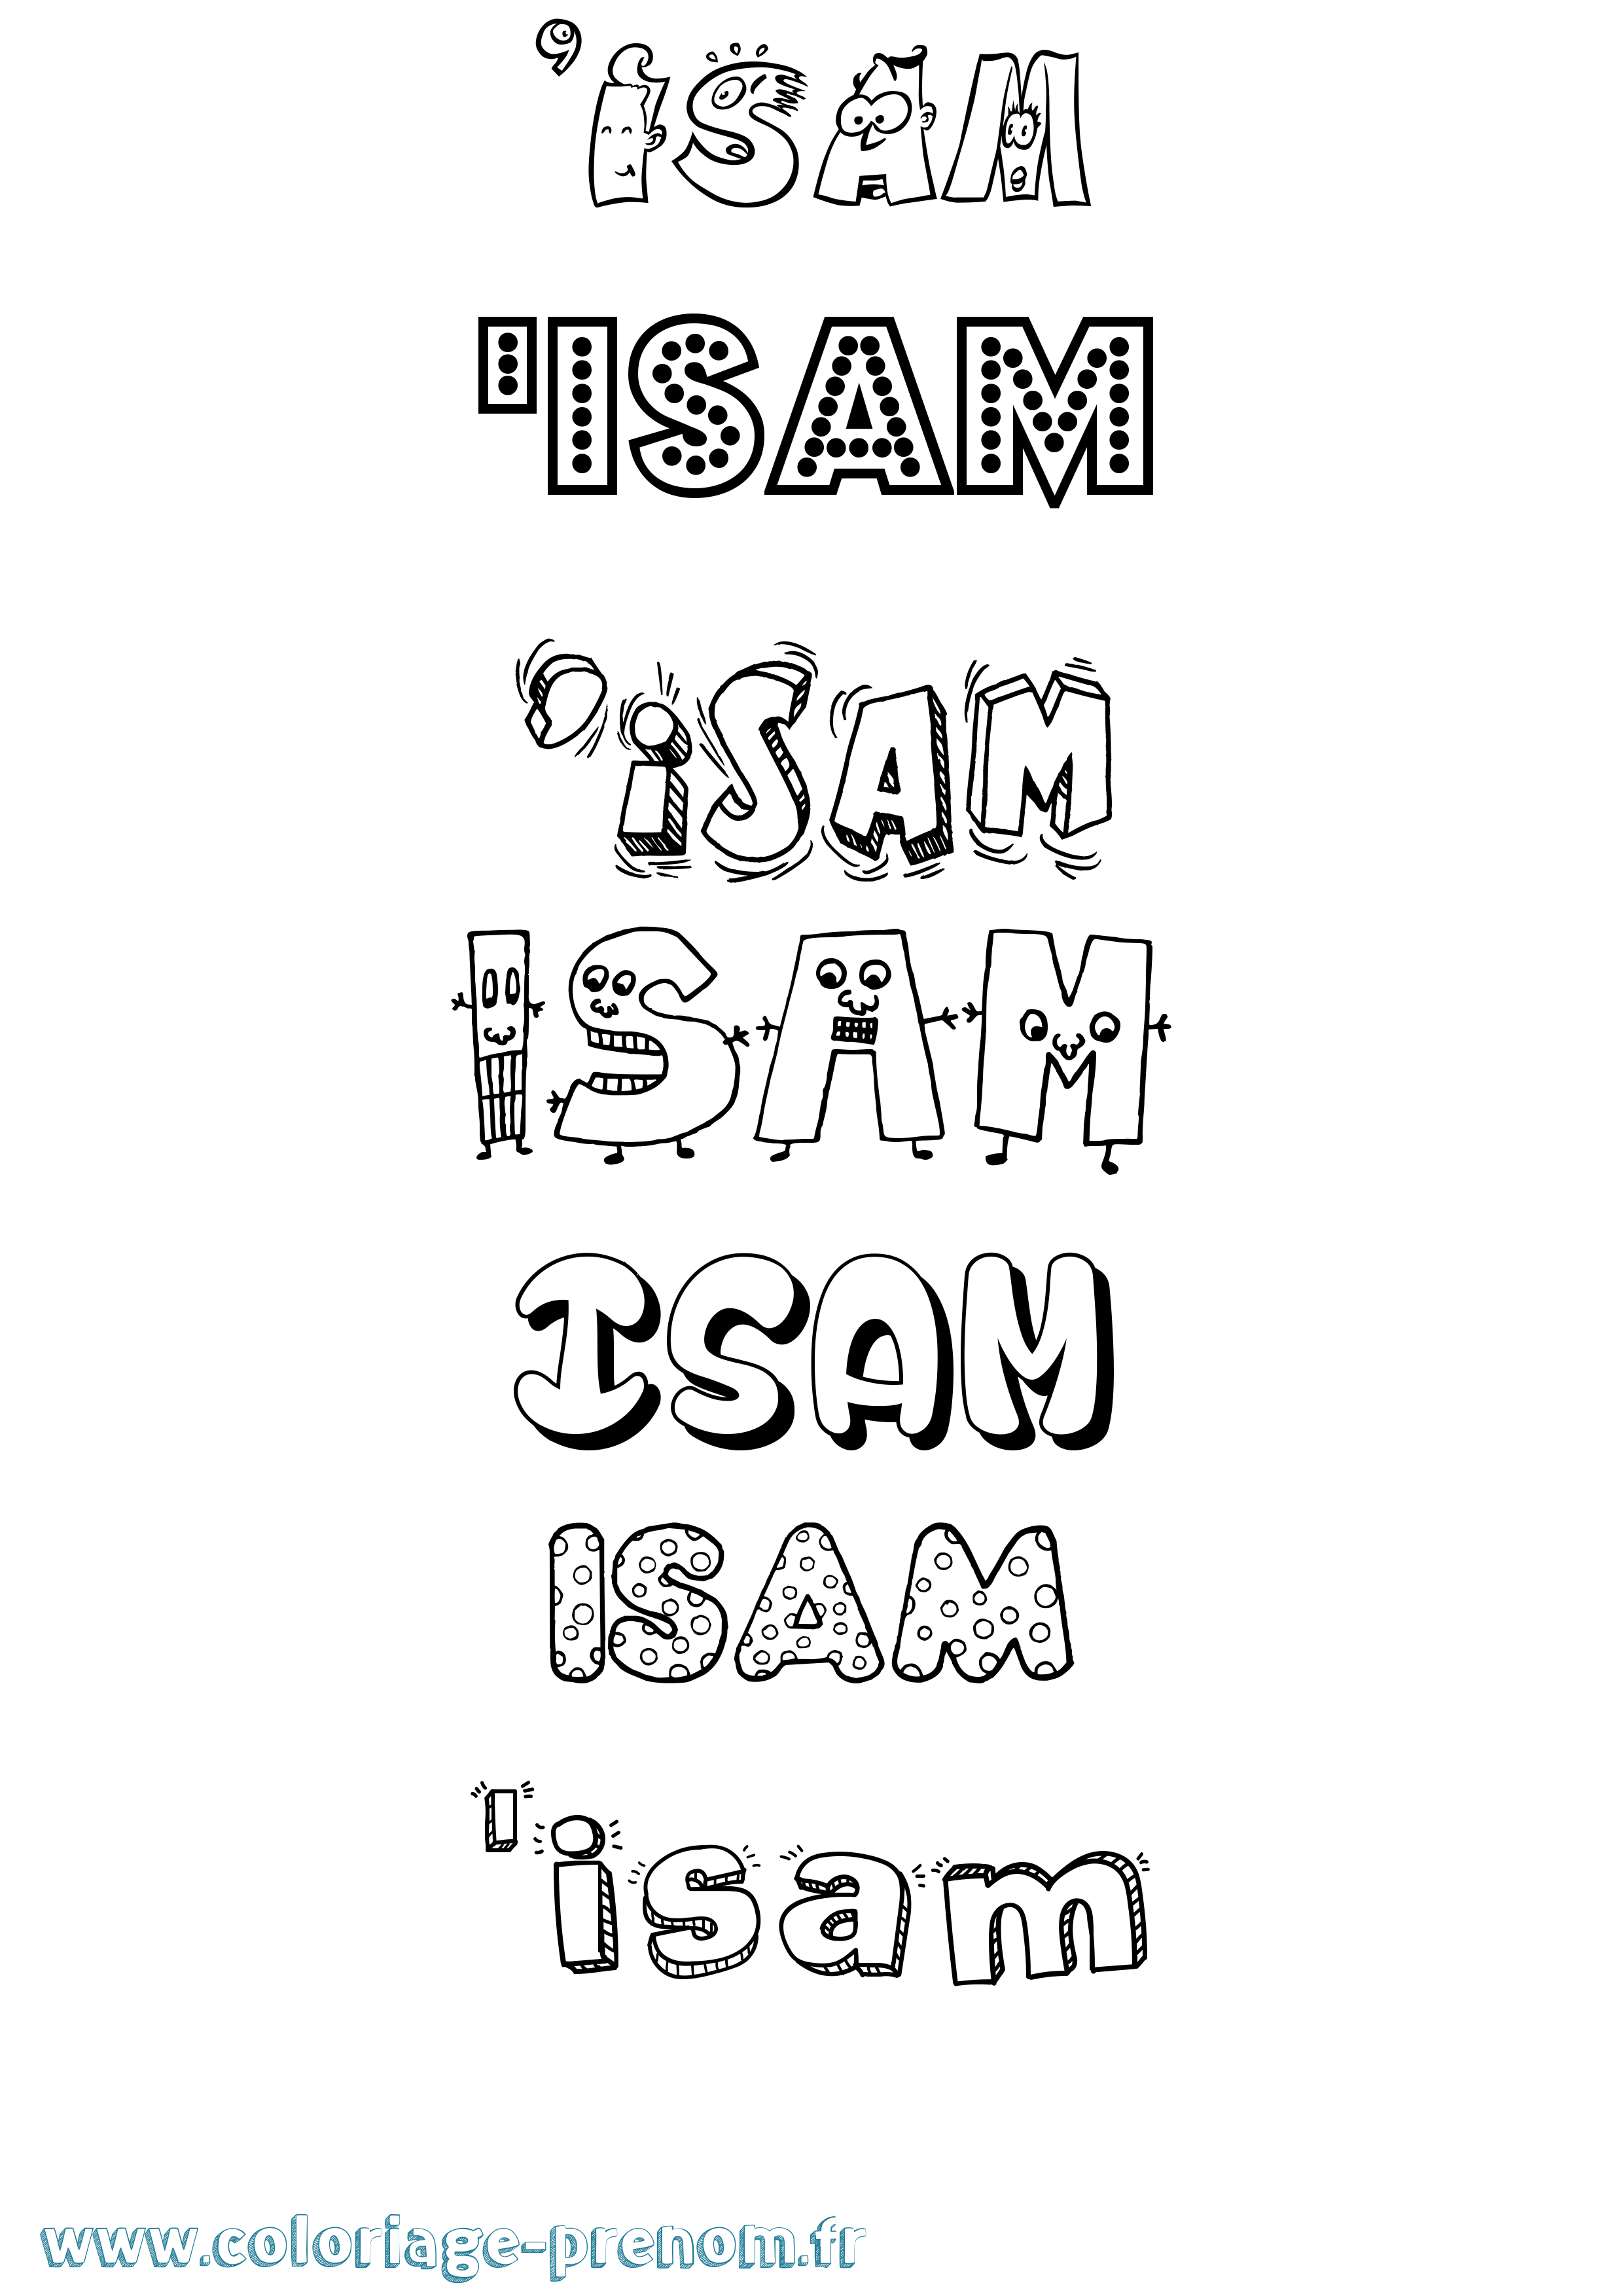 Coloriage prénom 'Isam Fun